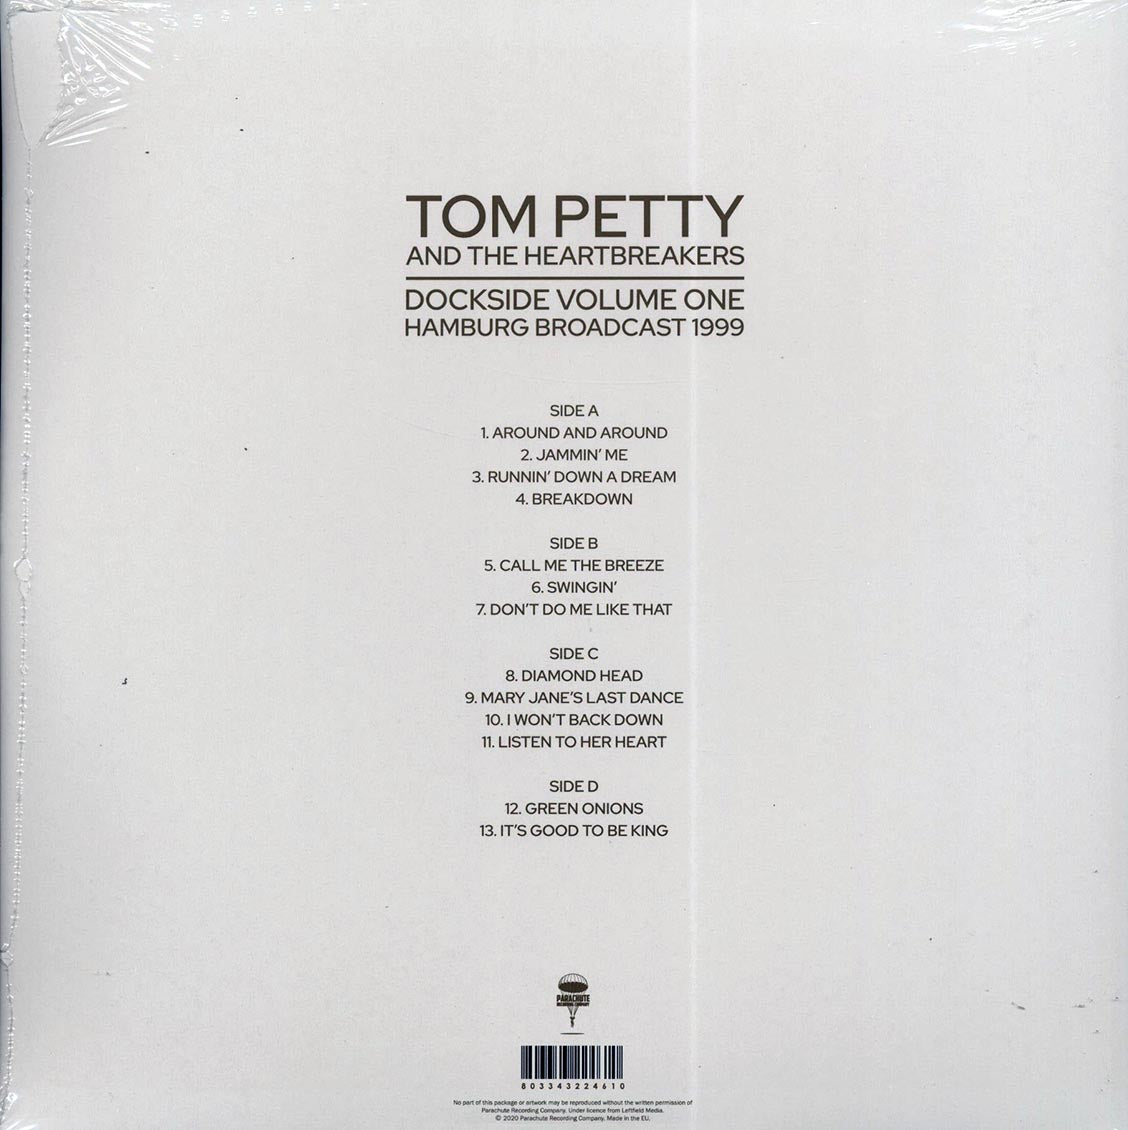 Tom Petty & The Heartbreakers - Dockside Volume 1: Hamburg Broadcast 1999 (ltd. ed.) (2xLP) - Vinyl LP, LP